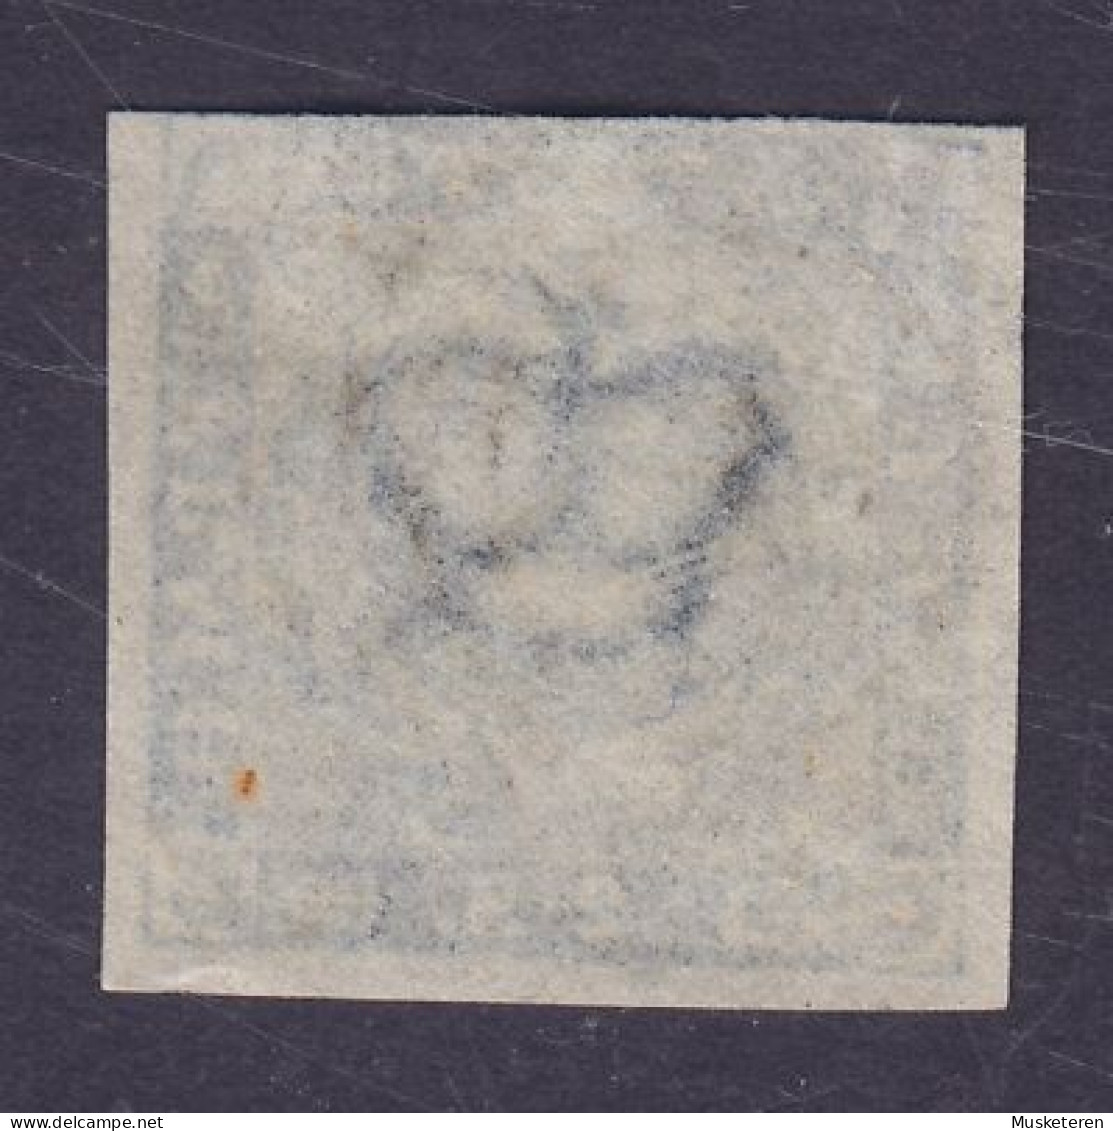 Denmark 1854 Mi. 3, 2 Skilling Kroninsignien Im Lorbeerkranz Number Cds. '1' KJØBENHAVN (2 Scans) - Used Stamps